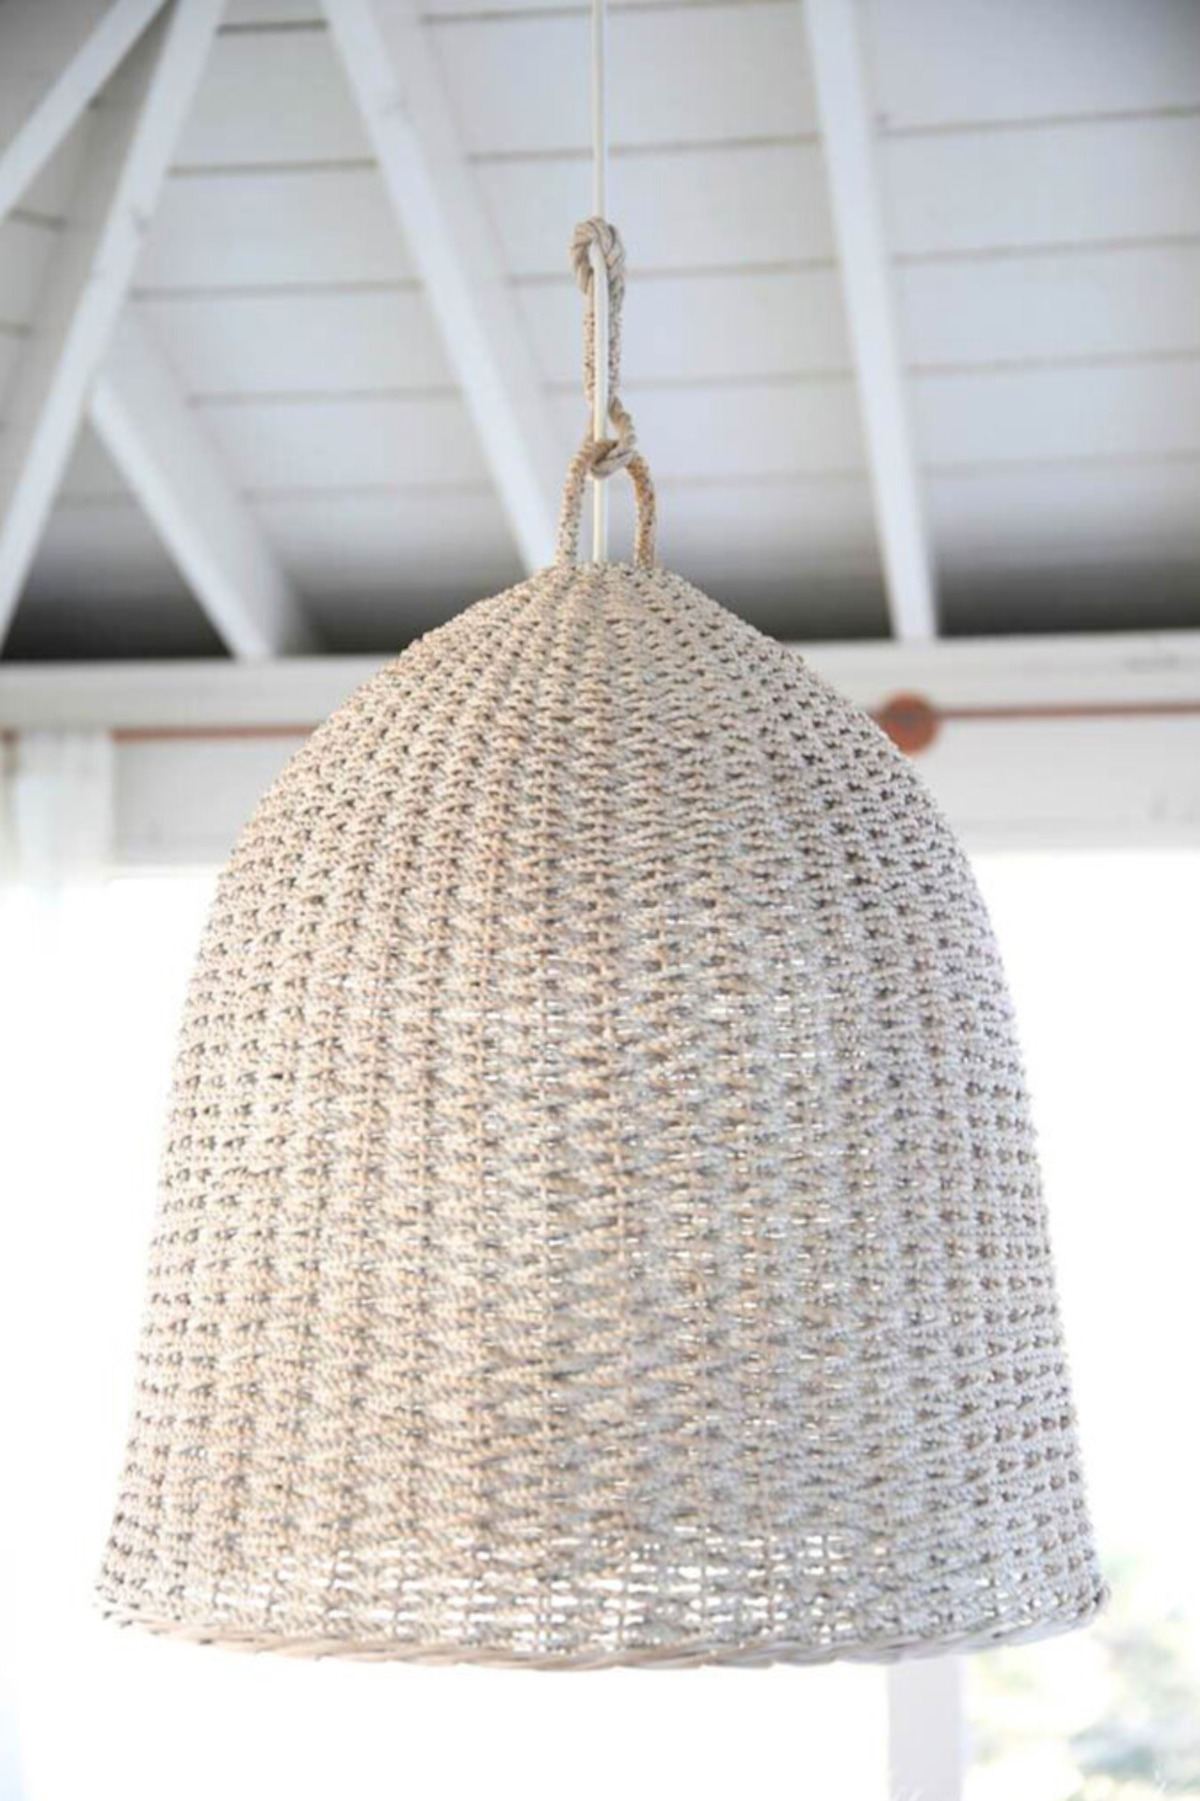 A white basket pendant light hangs on the porch.